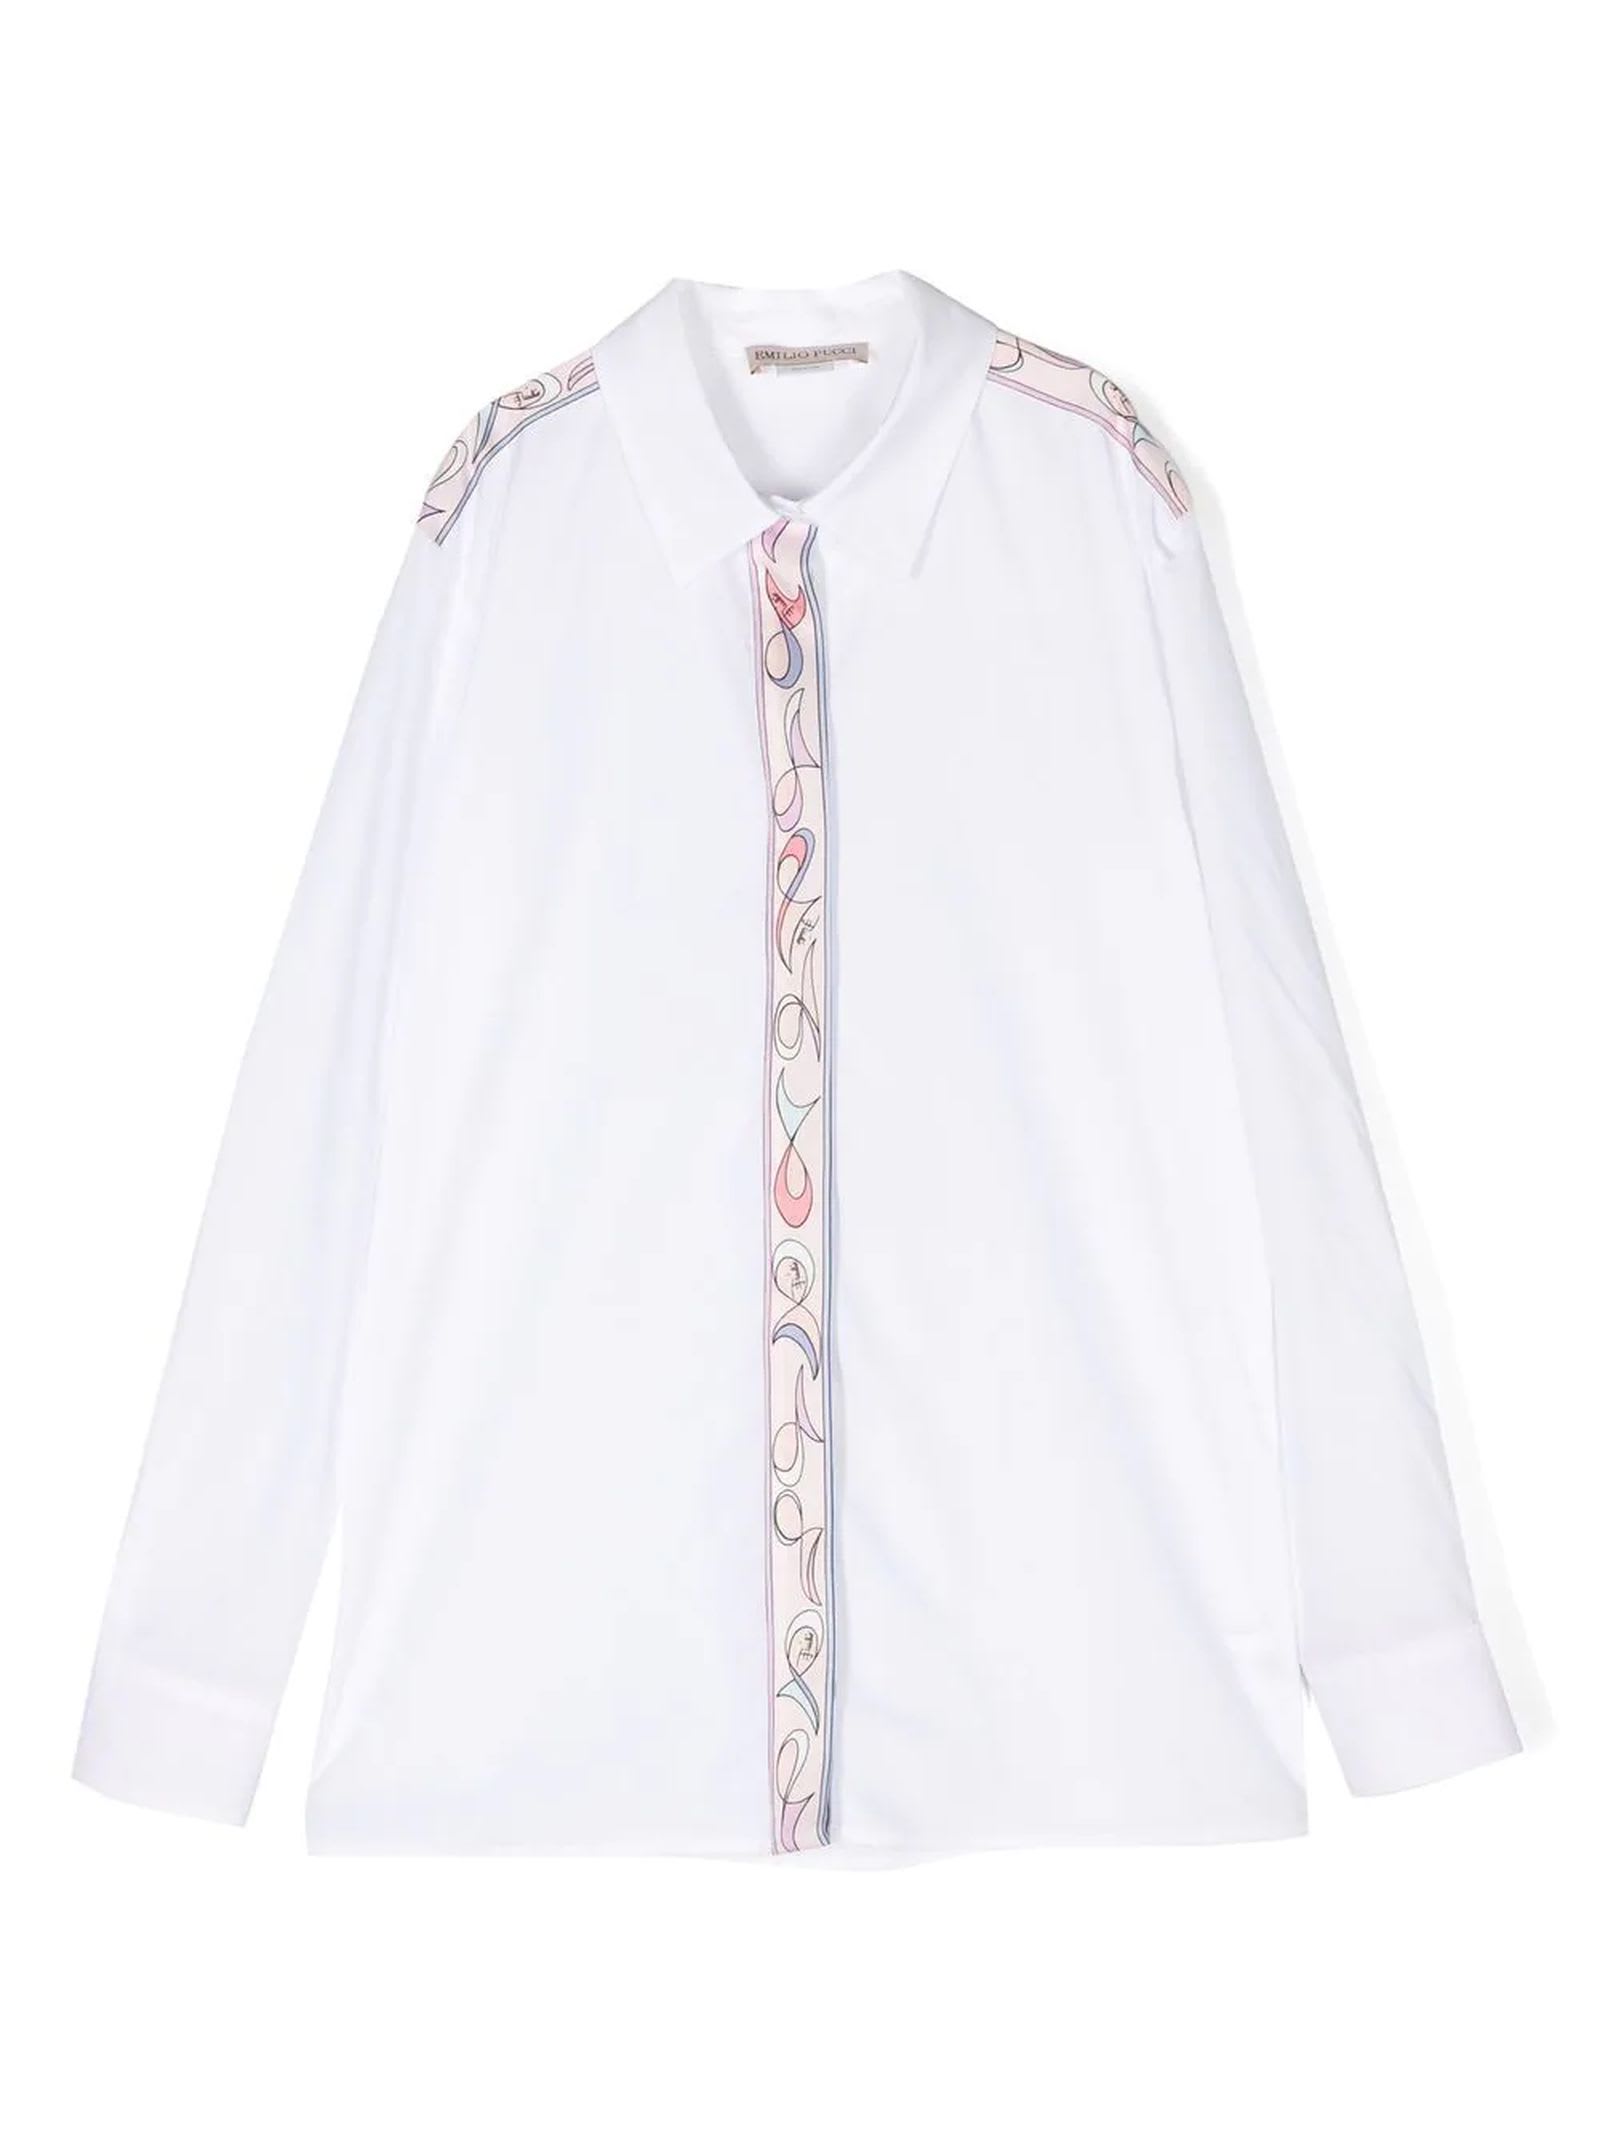 Emilio Pucci White Cotton Shirt